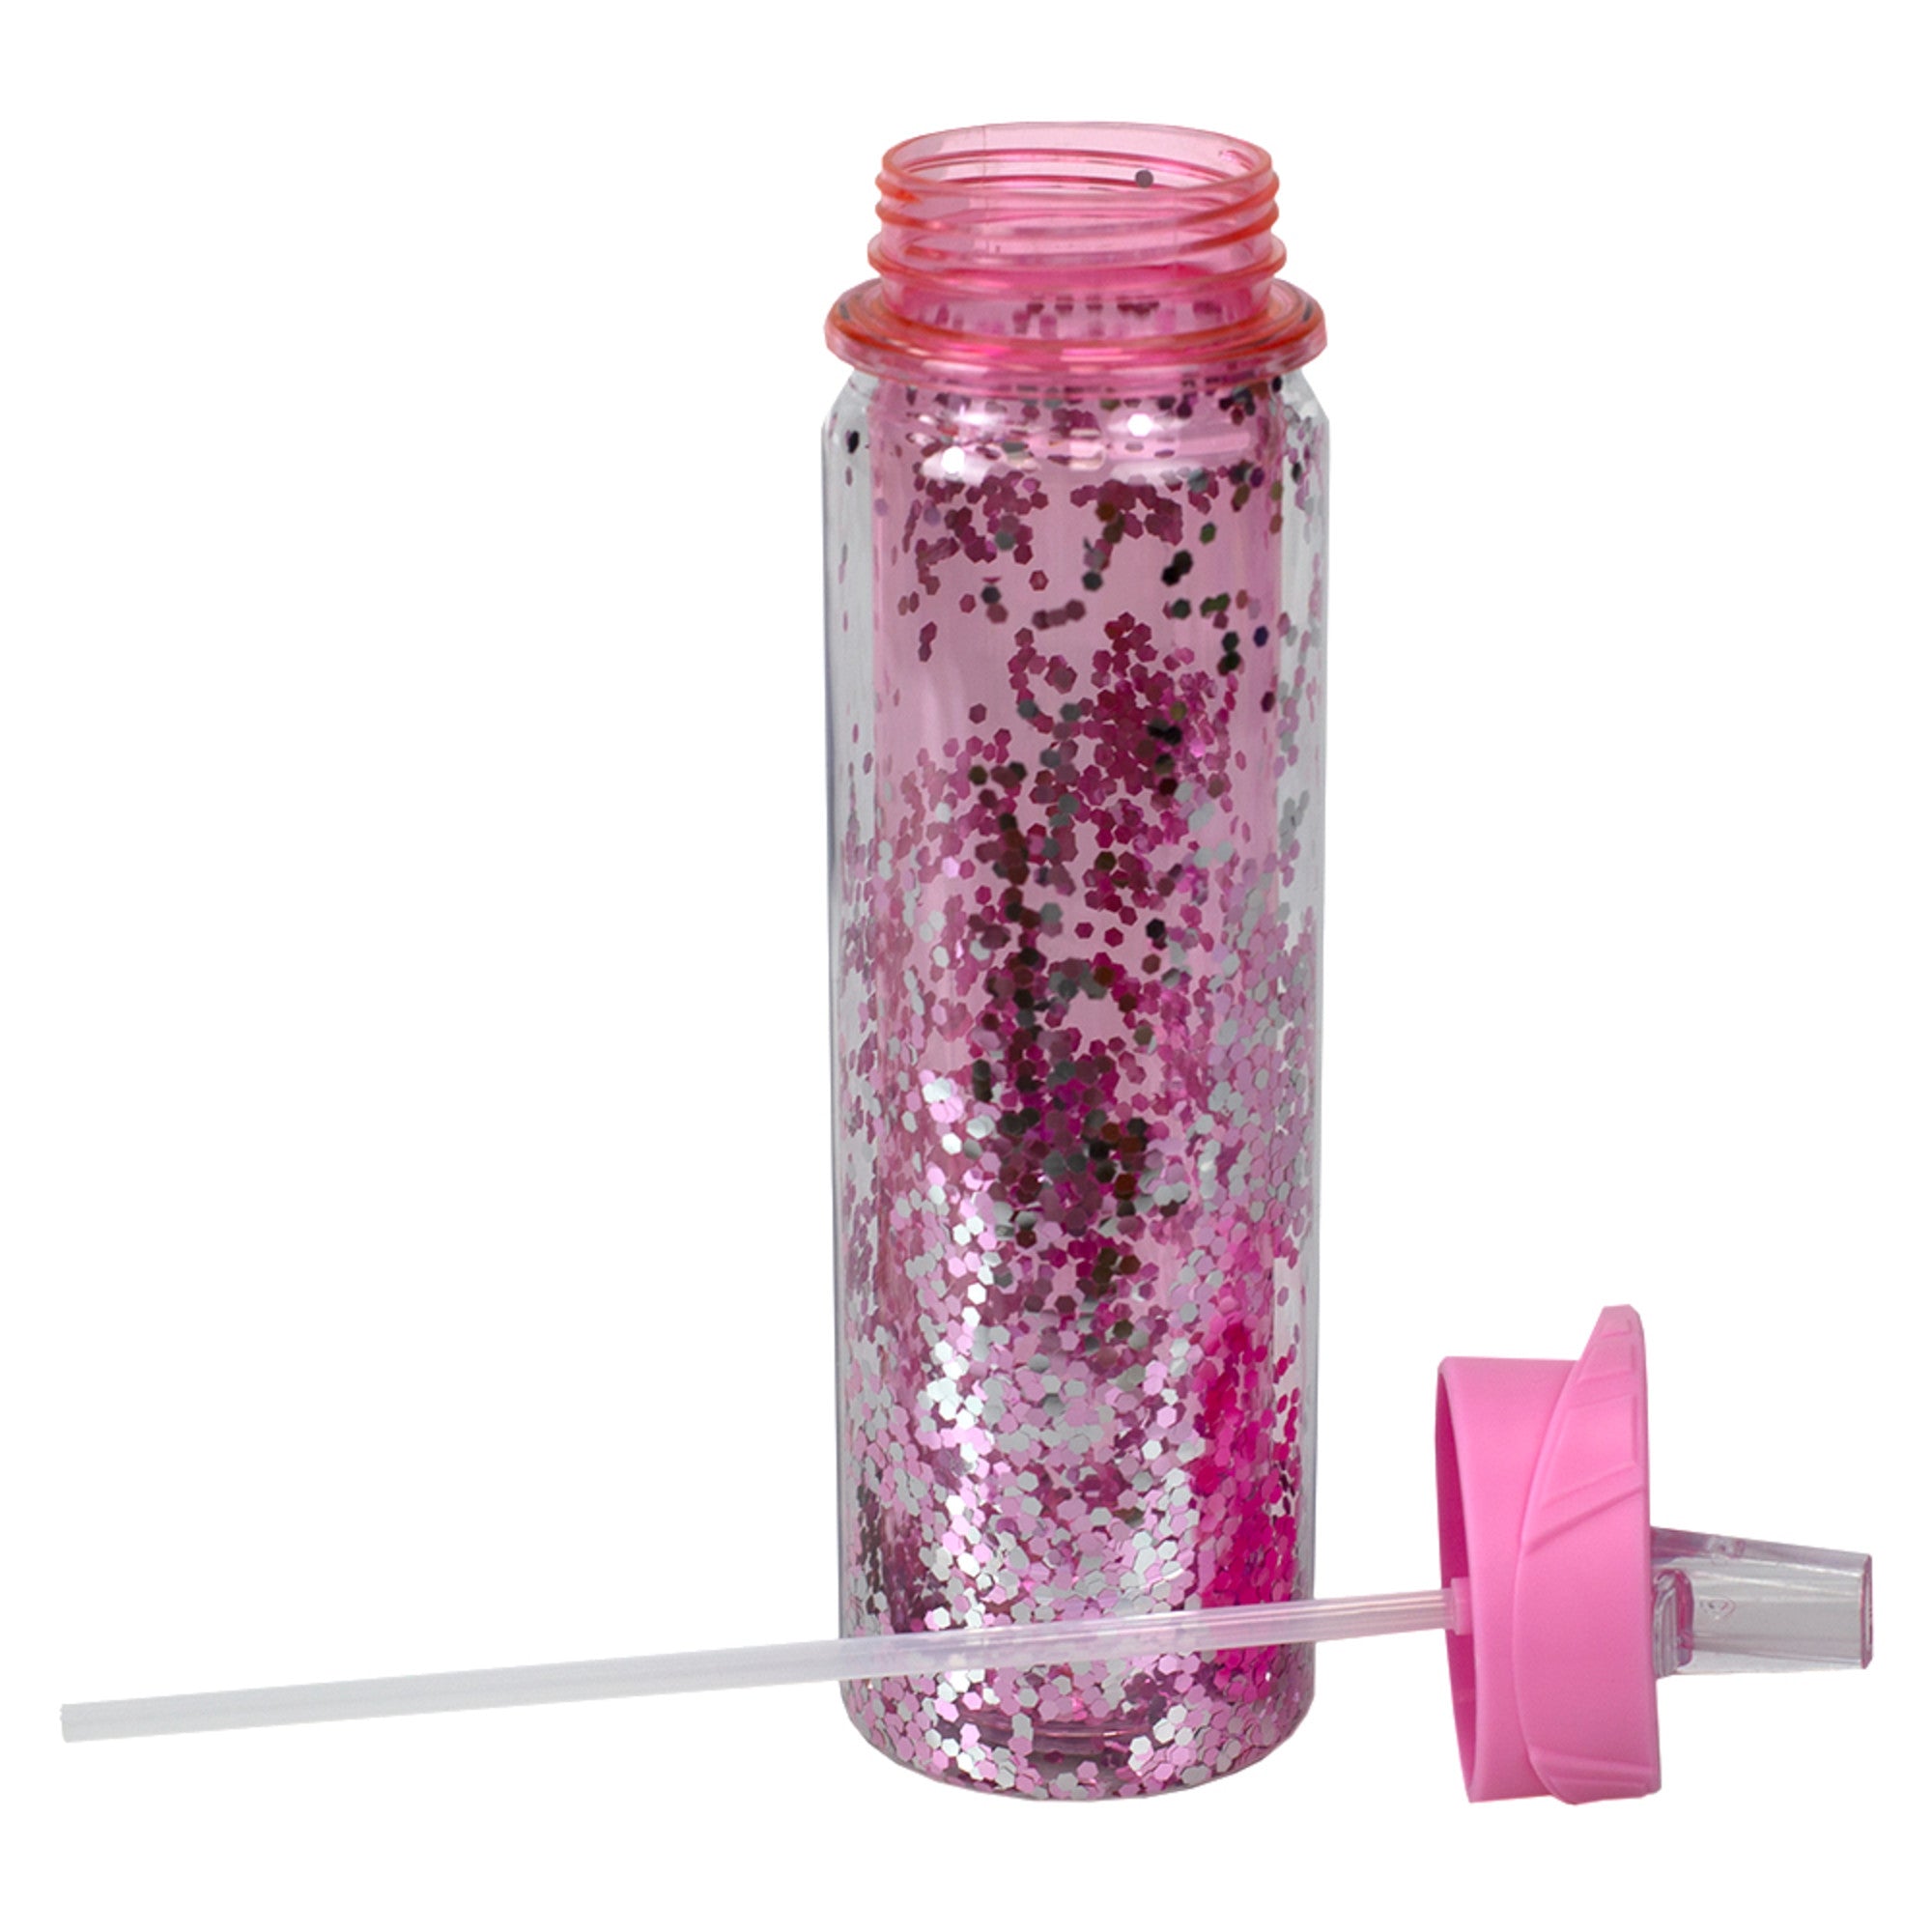 Home Basics Glitter 18 oz. Water Bottle - Assorted Colors